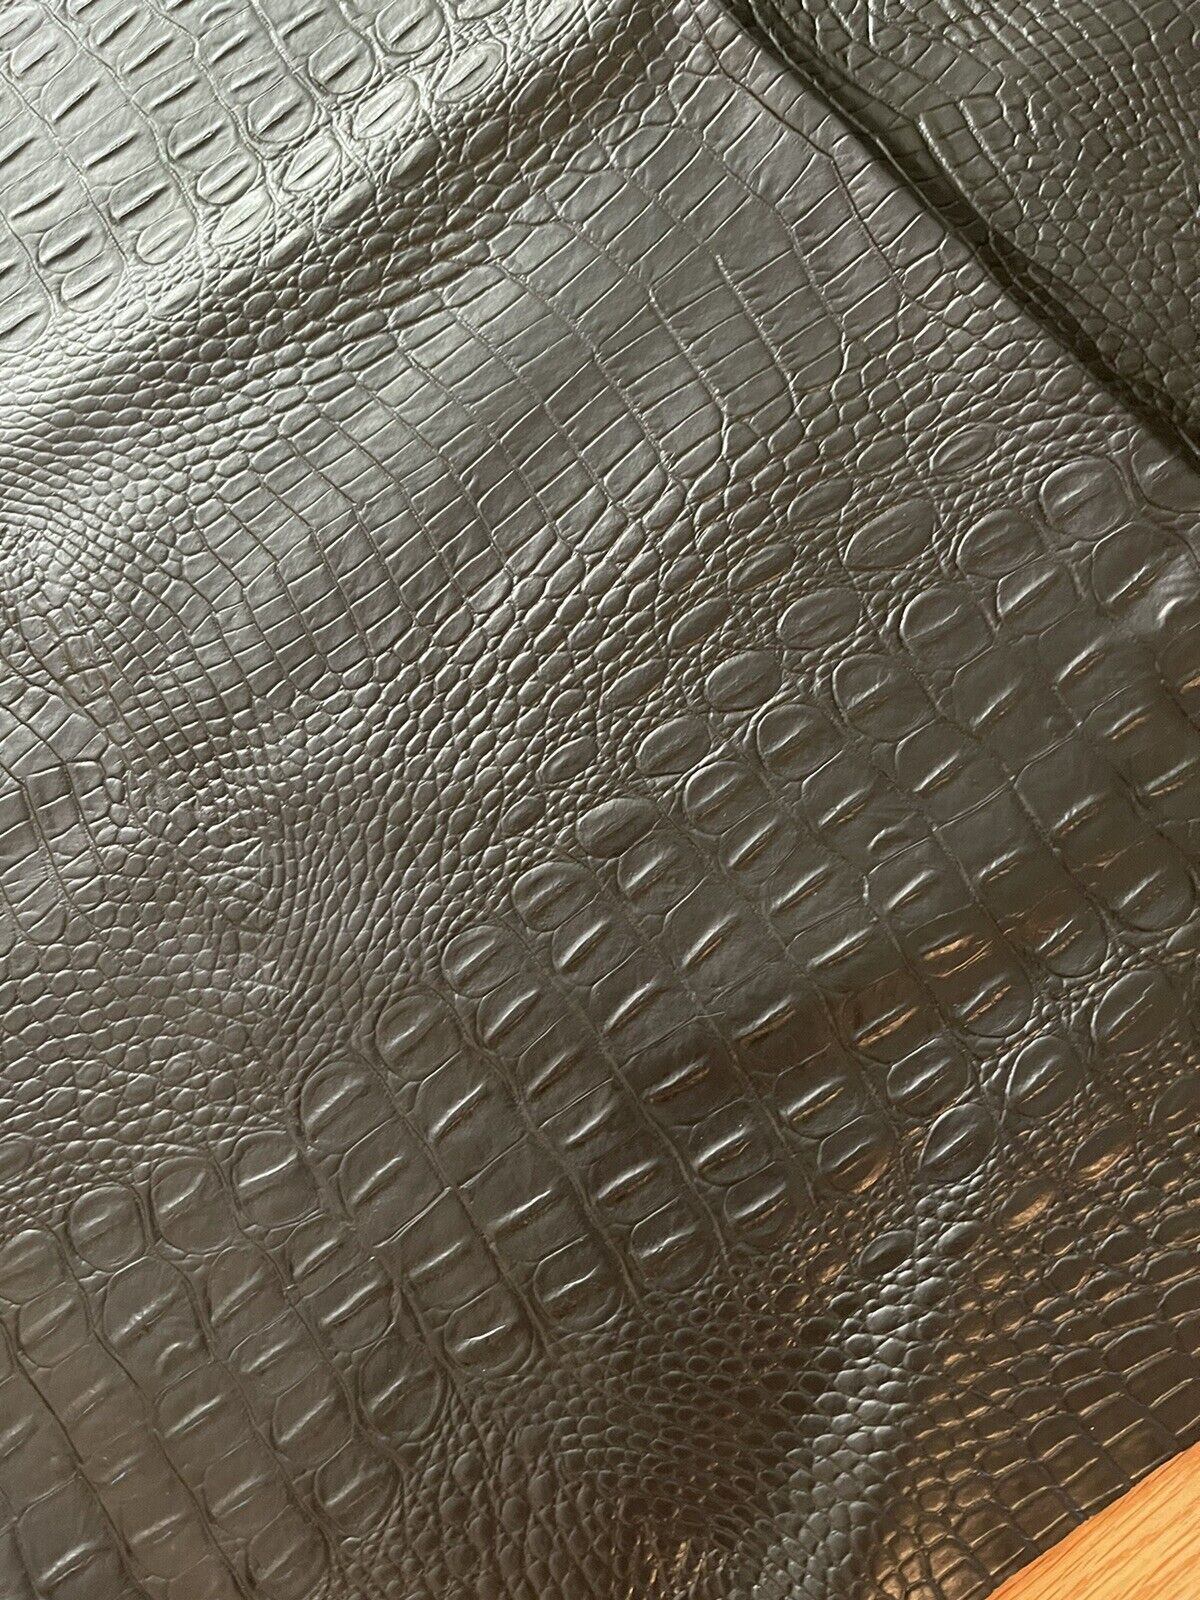 Black Faux Alligator Texture Vinyl Upholstery Fabric 55x 48” Auto, Furniture